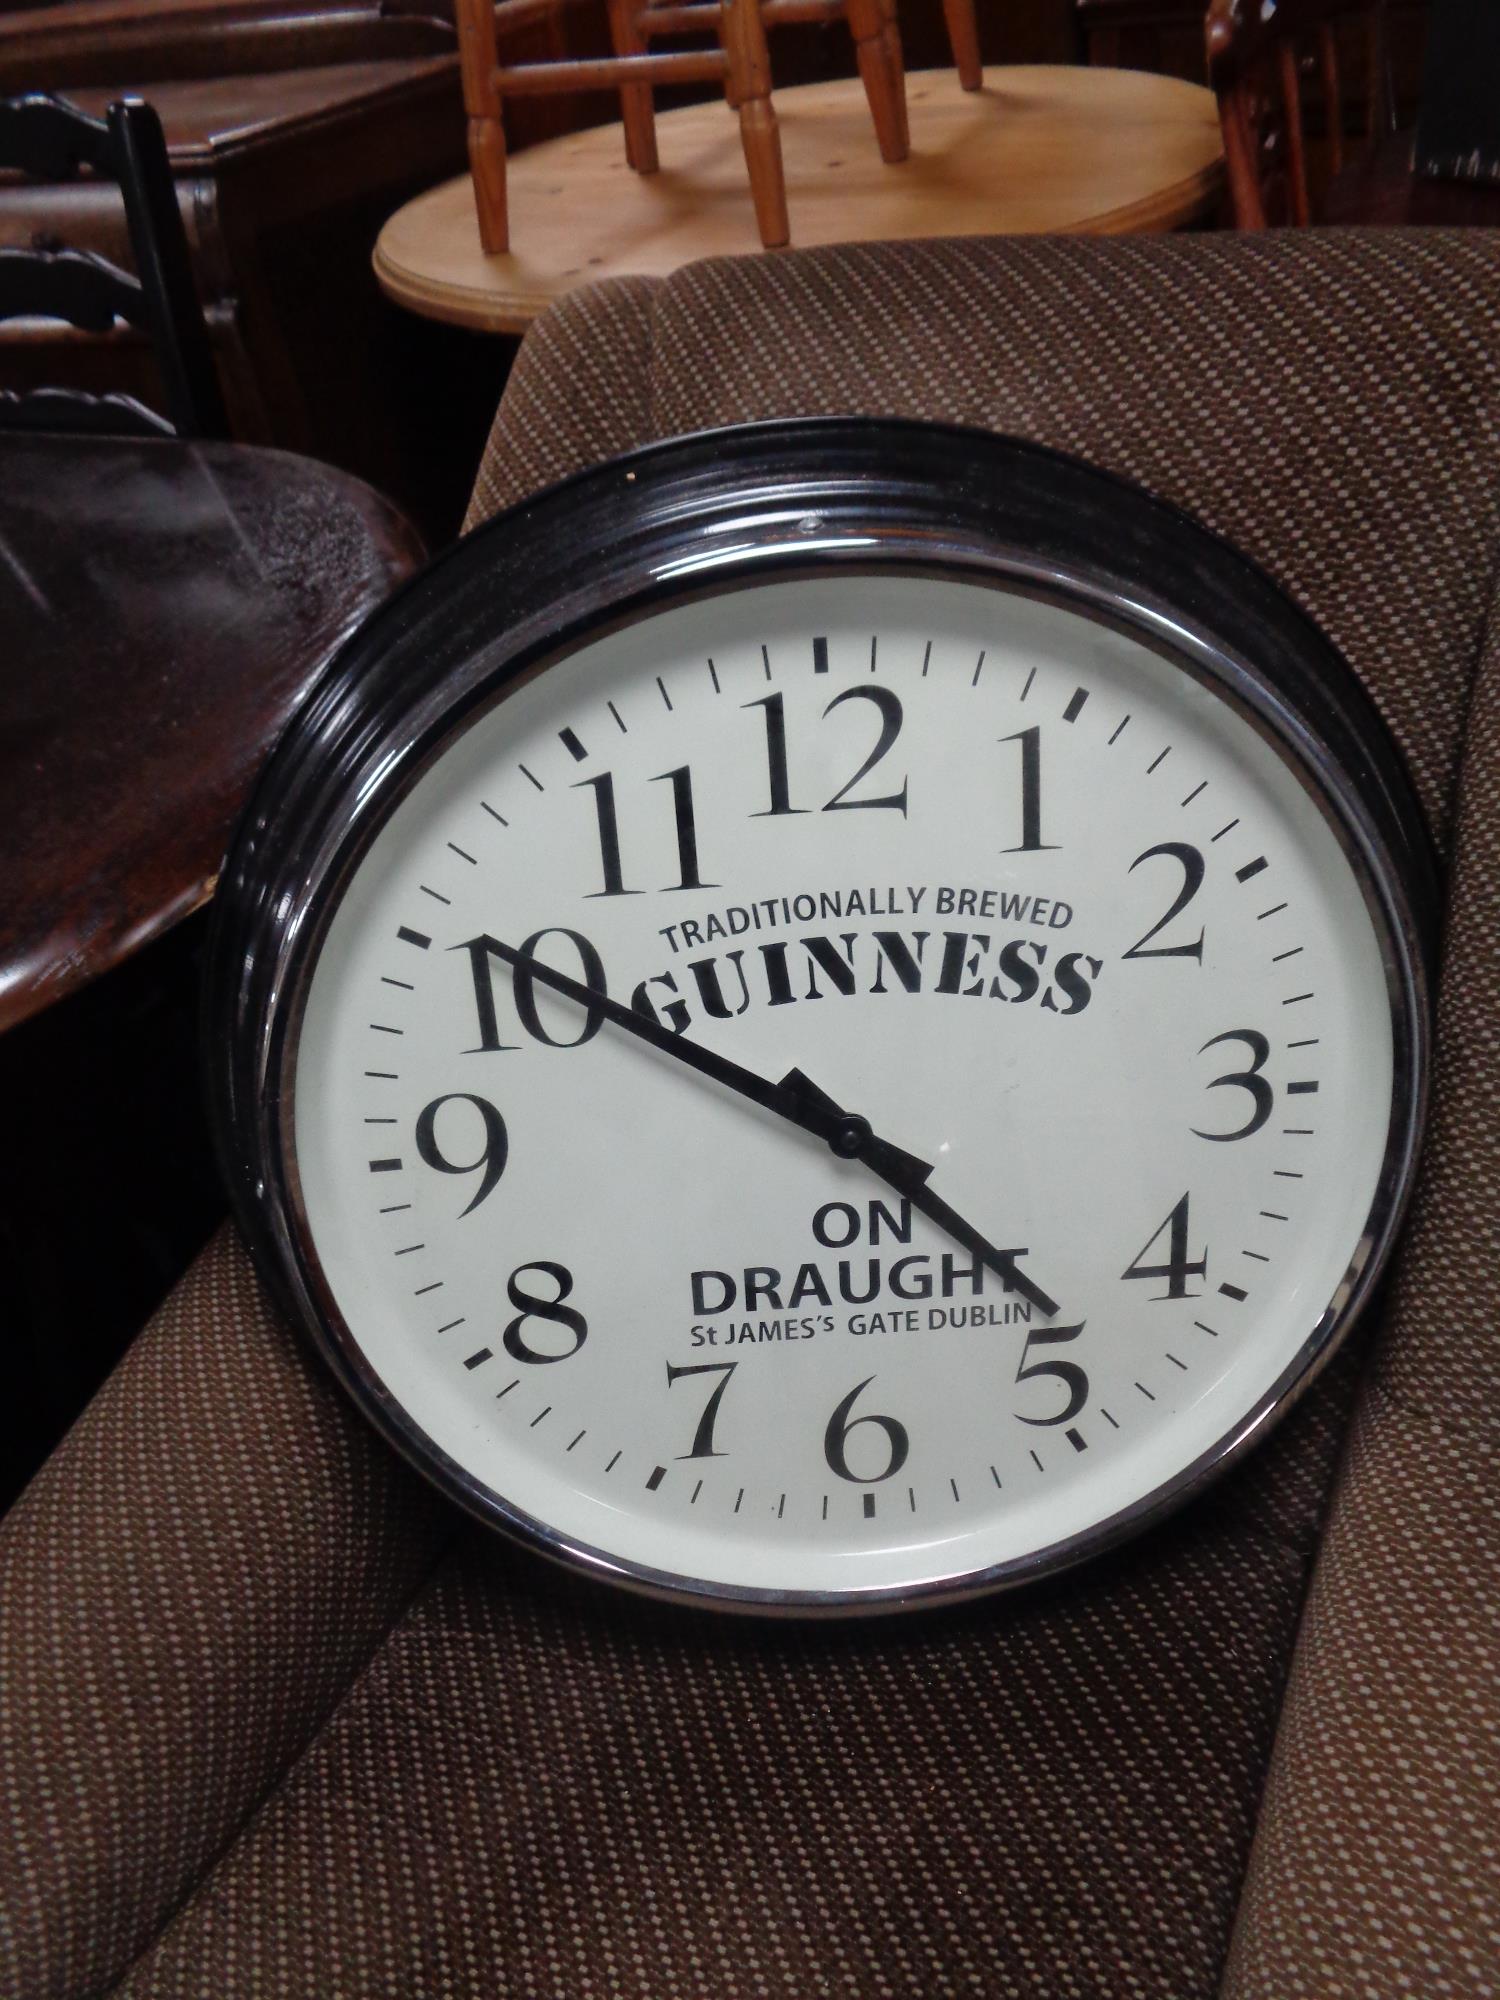 A circular wall clock bearing Guinness advertising